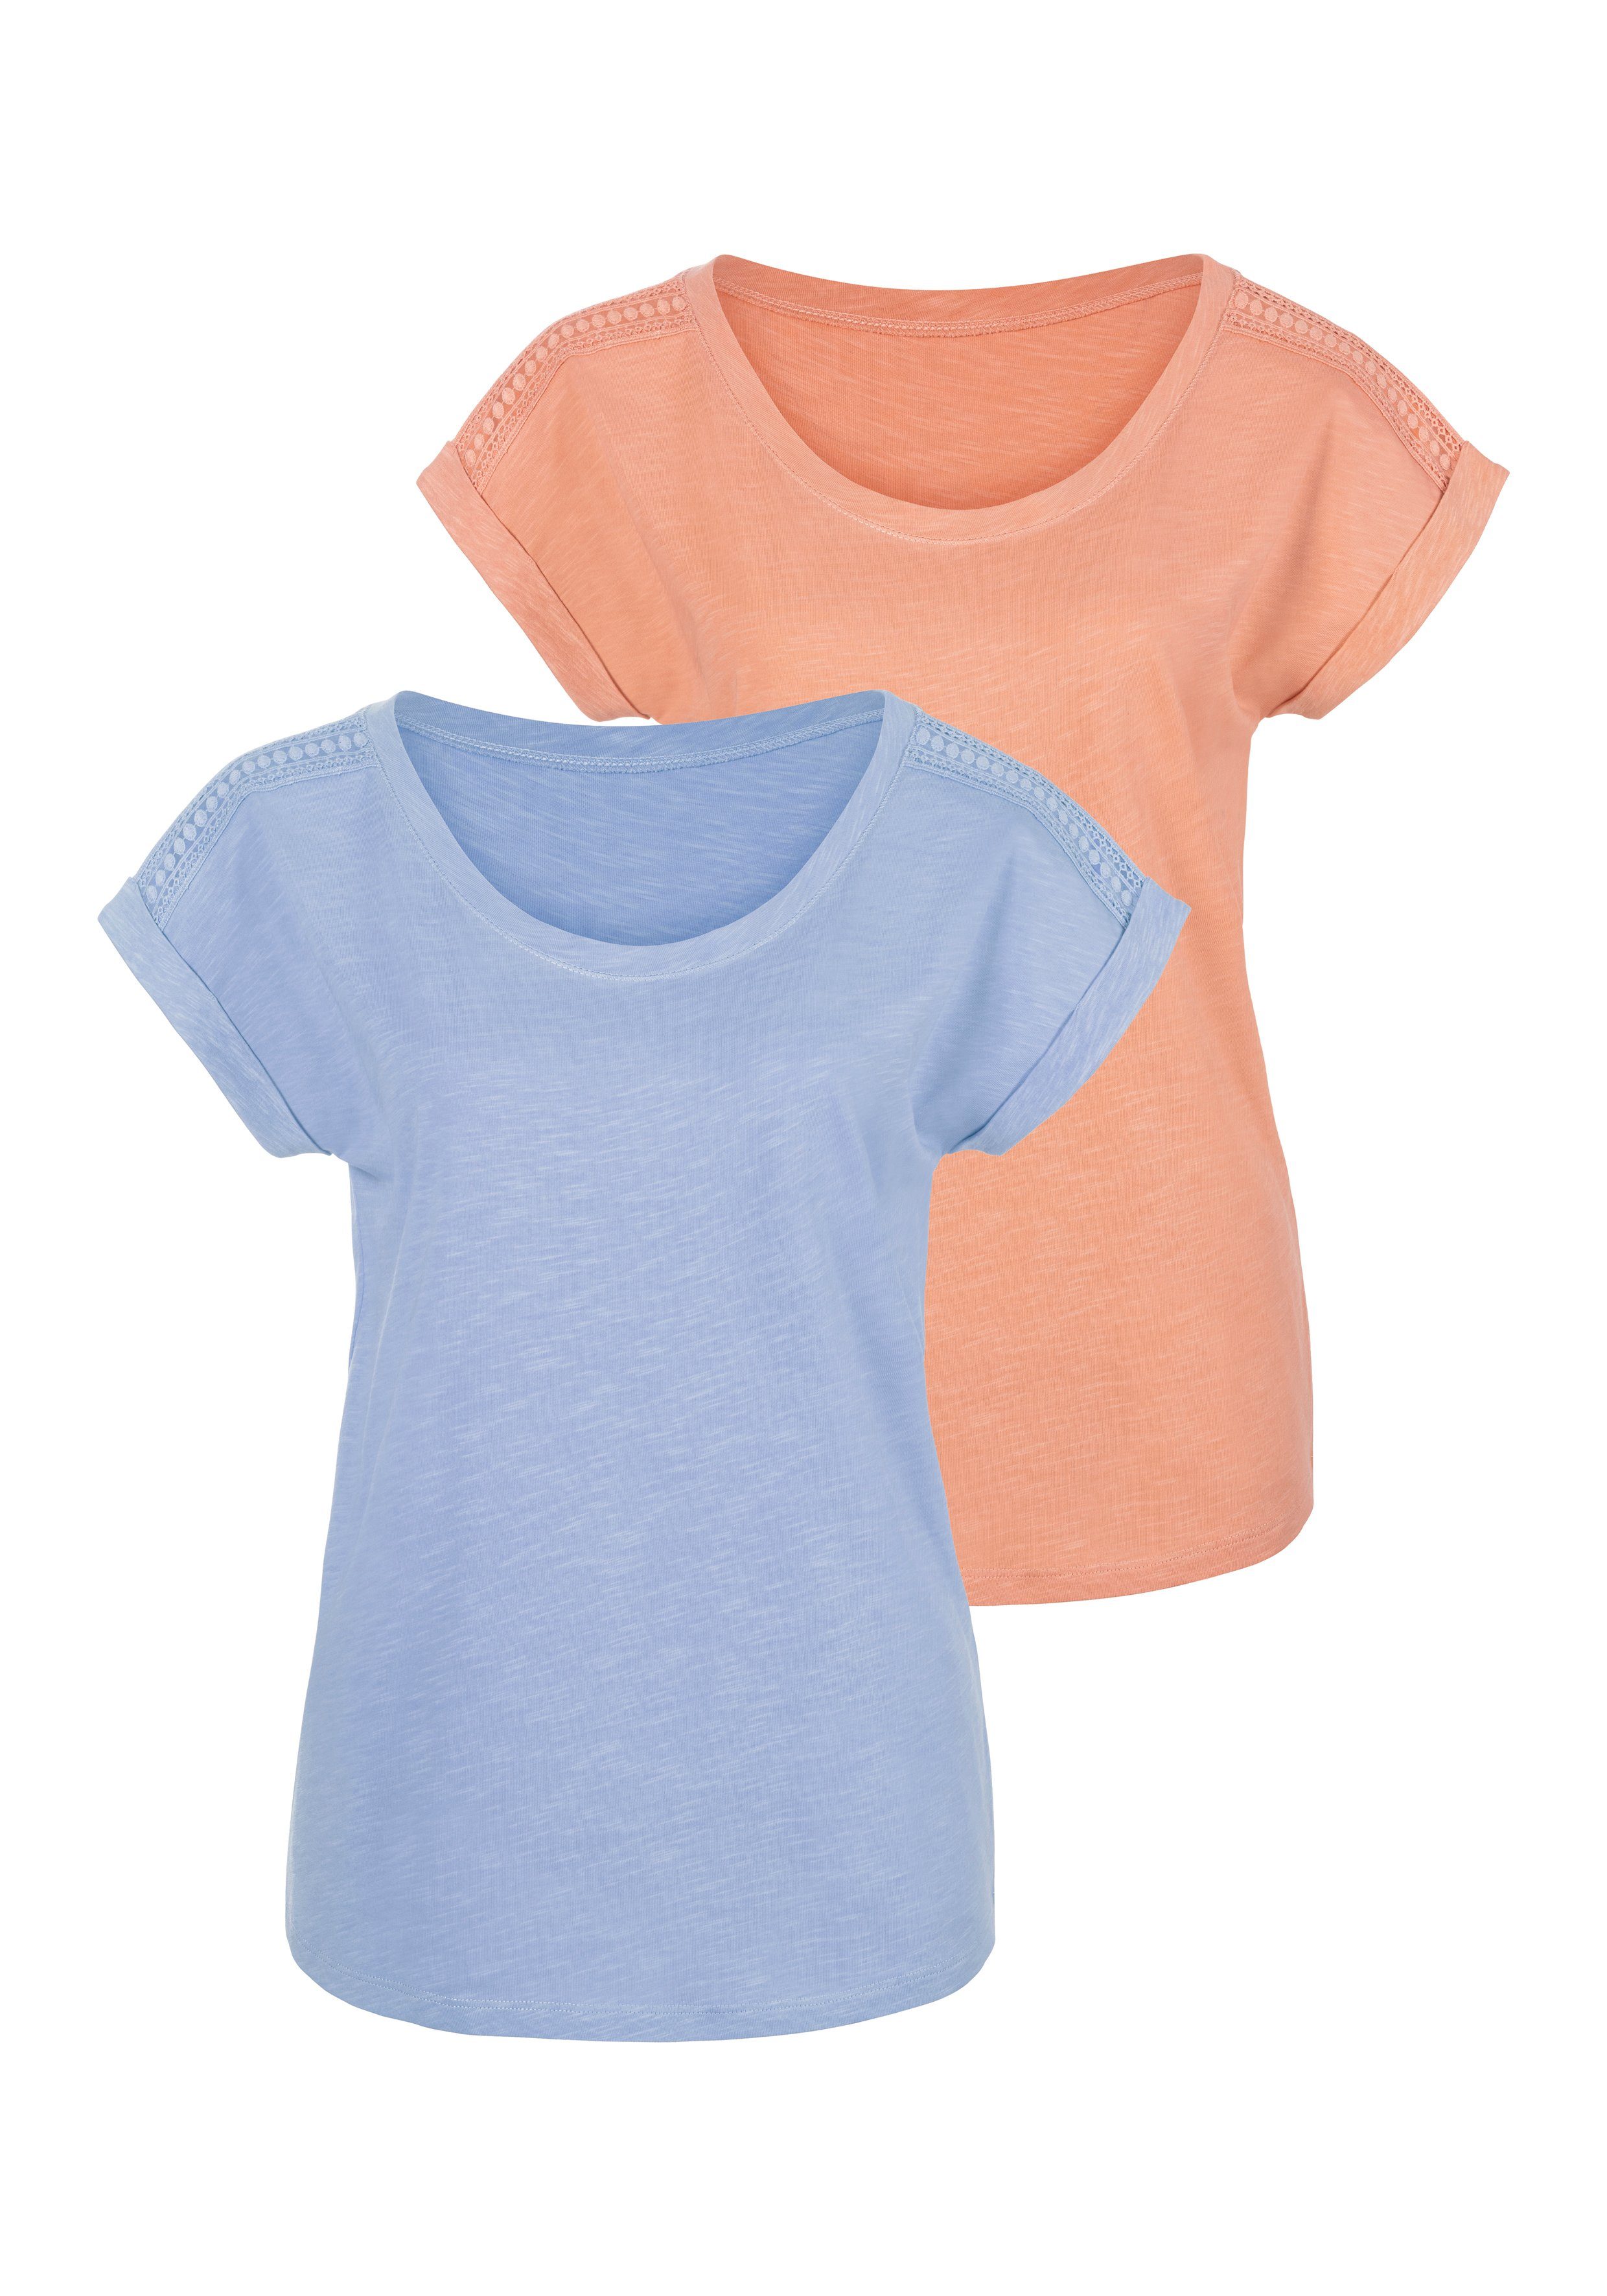 Vivance T-Shirt (Packung, 2er-Pack) mit Häkelspitze Schulter hellblau orange, an der